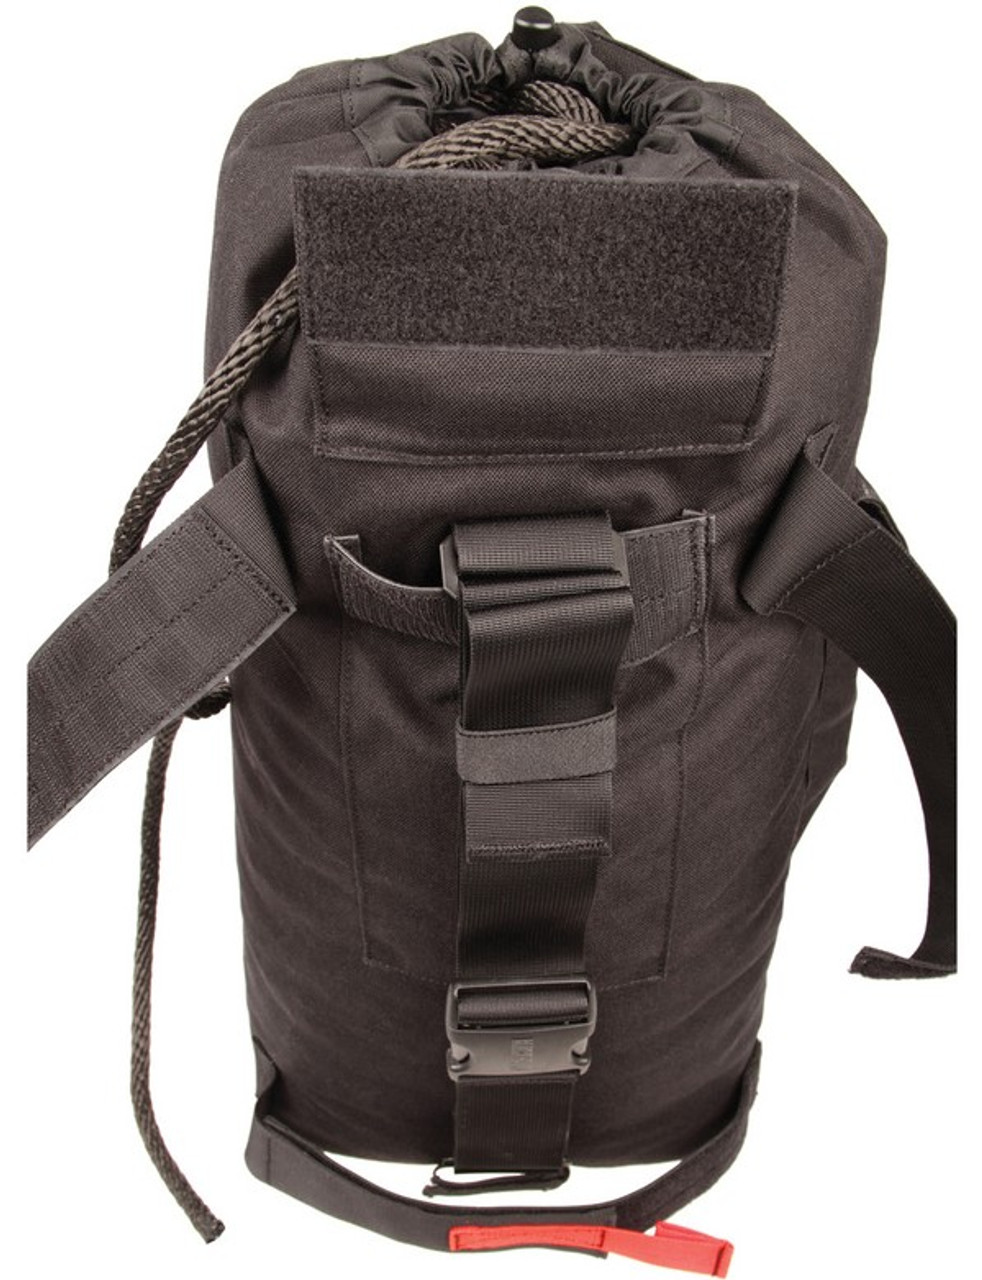 Blackhawk Enhanced Tactical Black Rope Bag fits 200 Feet of Rope